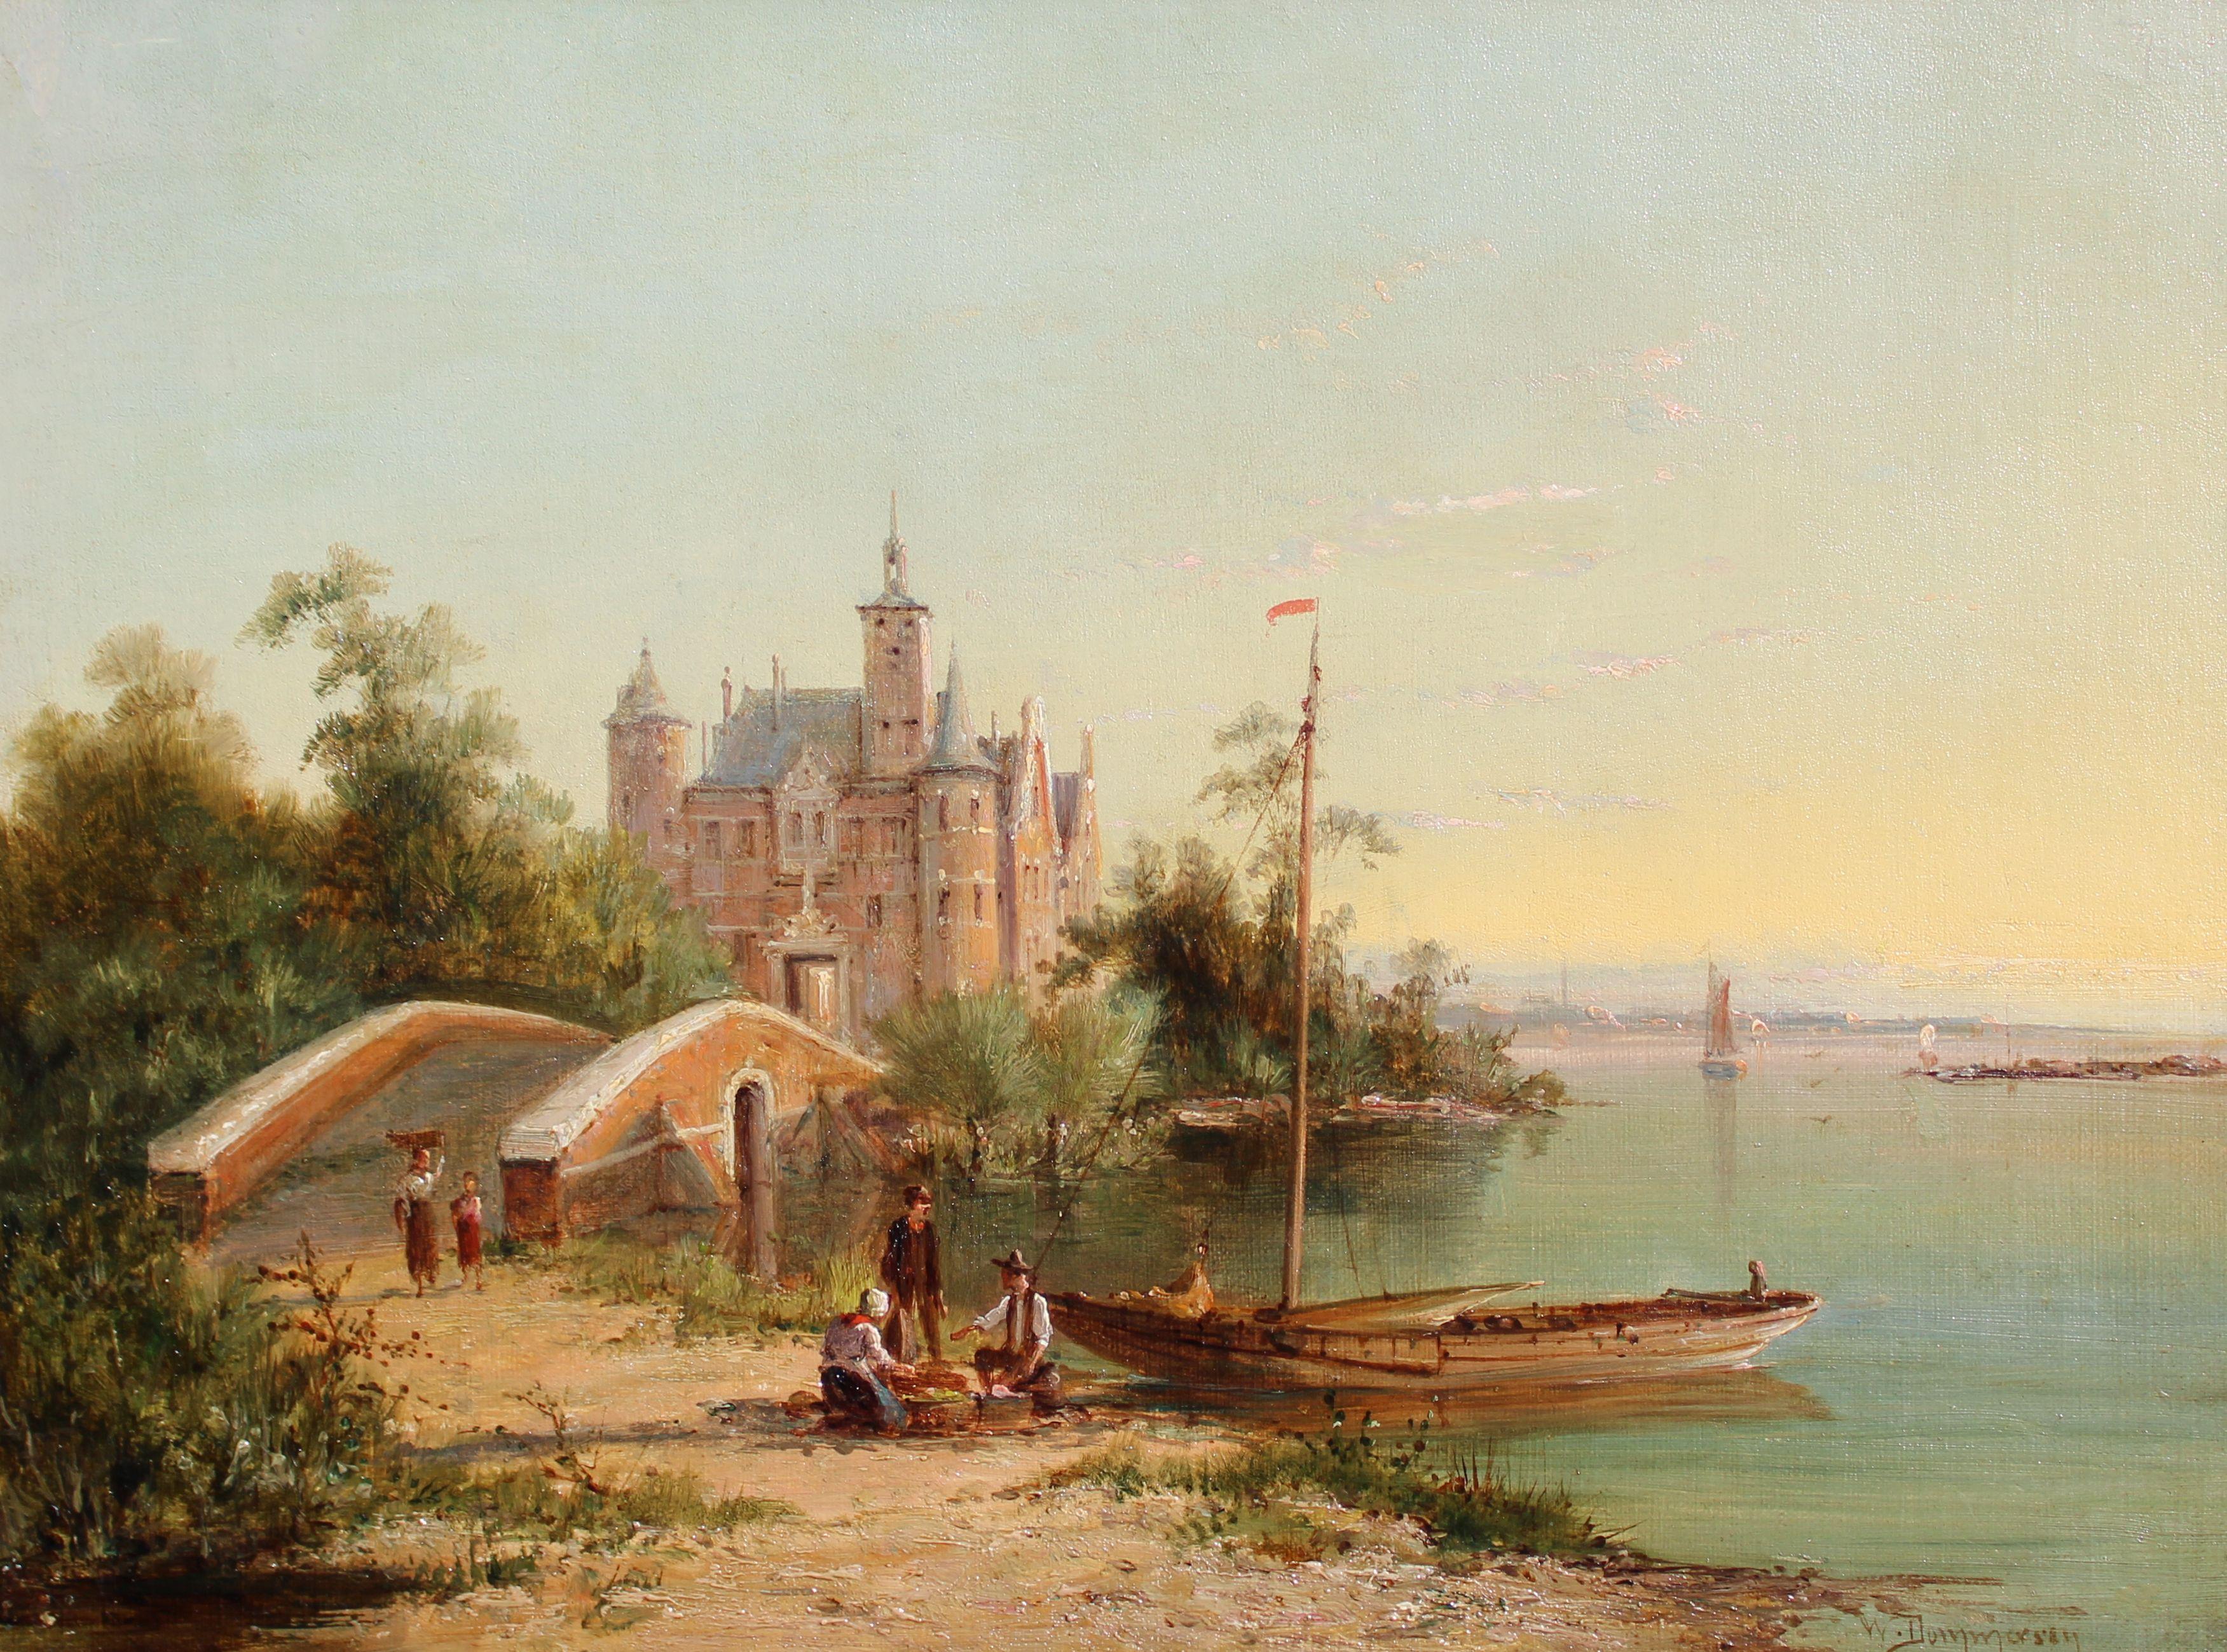 Dommersen, William Raymond Figurative Painting - Dutch estuary landscape  Oil on canvas, 30x40.5 cm